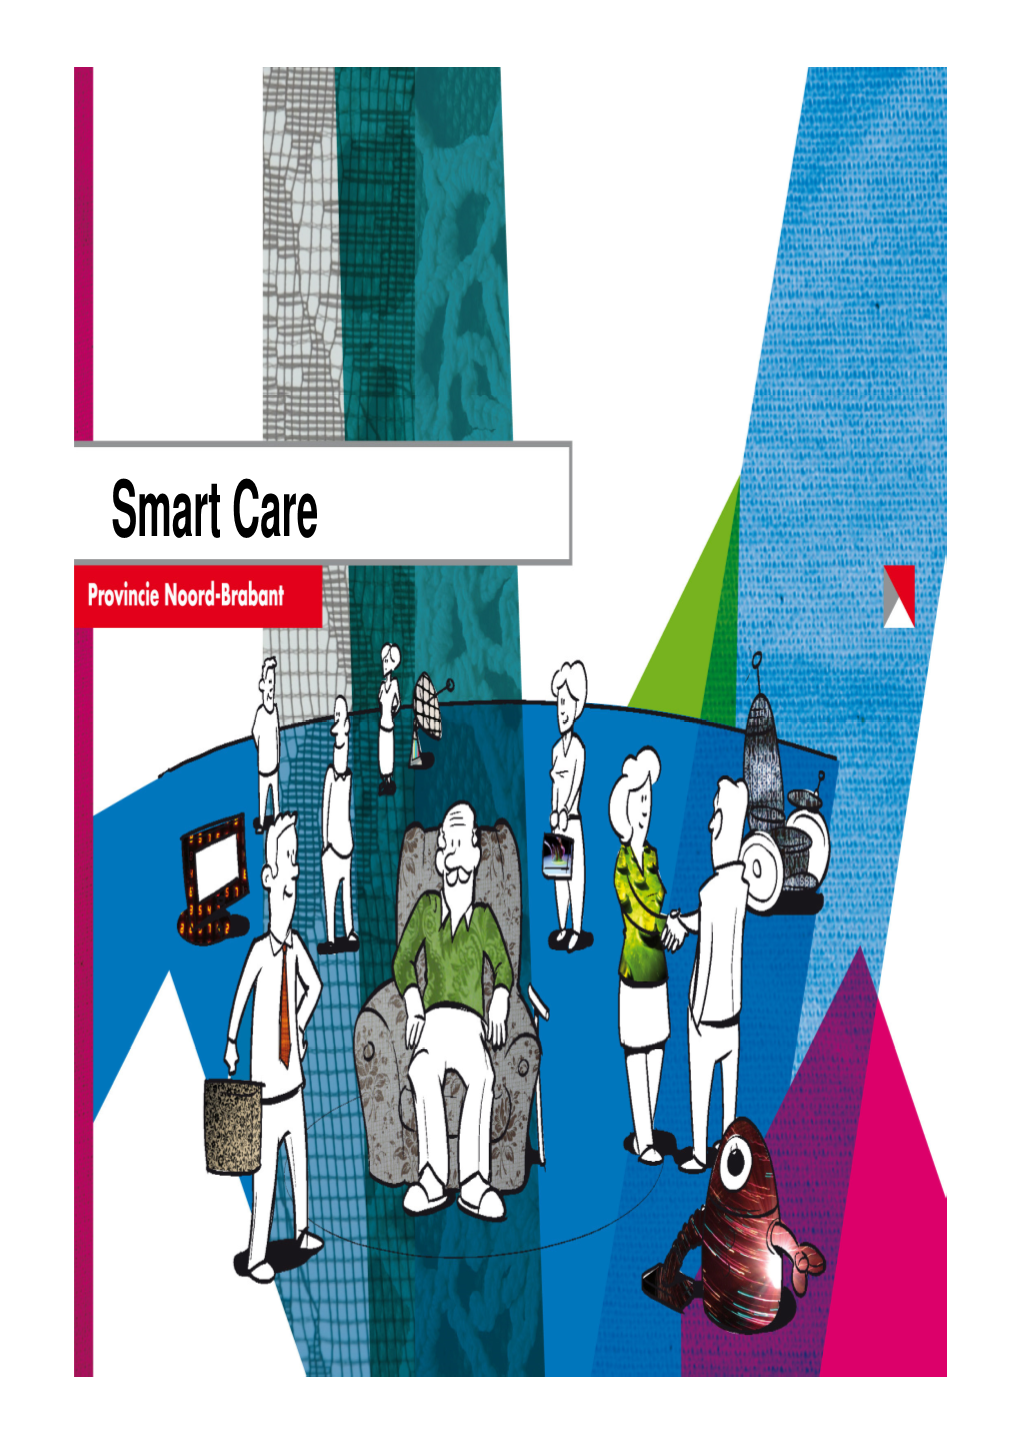 Smart Care Edwin Mermans Smart Care Program Province N Oord-Brabant W W W .Brabant.Nl/Smartcare Emermans@ Brabant.Nl